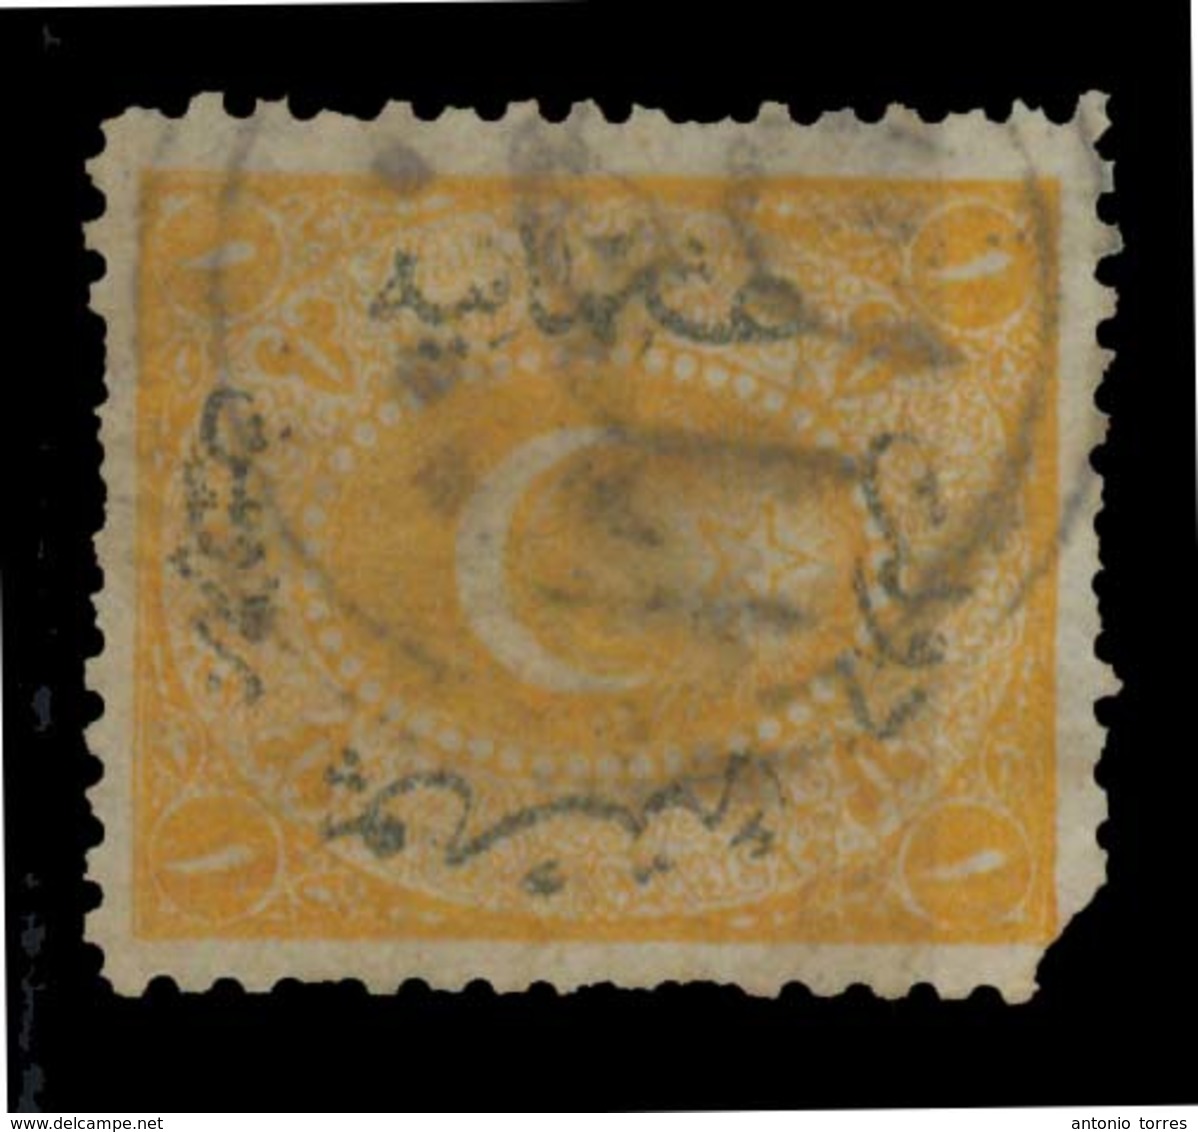 ALBANIA. C.1878. Turkish Period Stamp Cancelled Elbassan (x / R). V Scarce. Fine. - Albanie